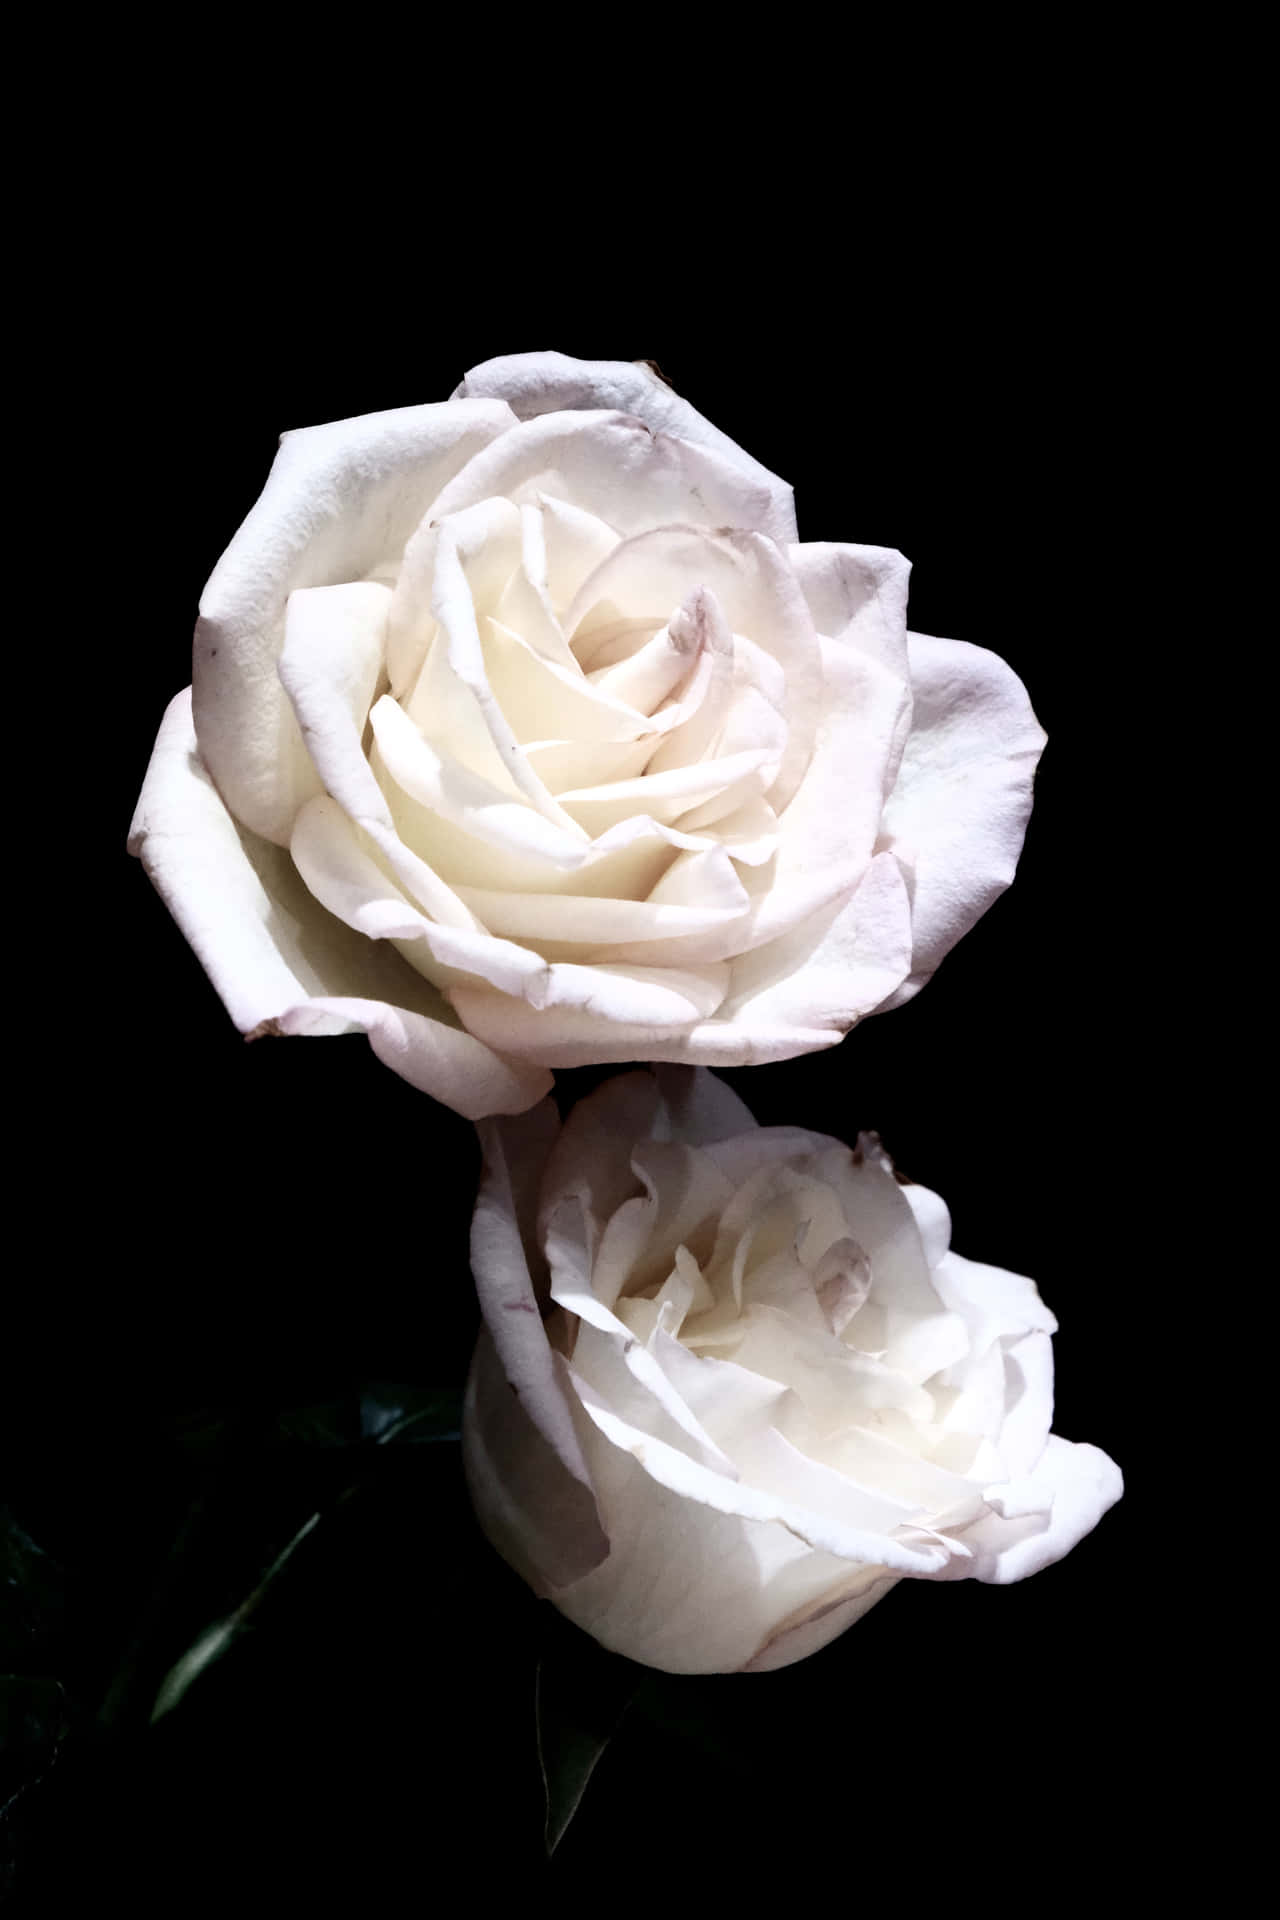 Caption: Elegant White Roses on a Pristine Background